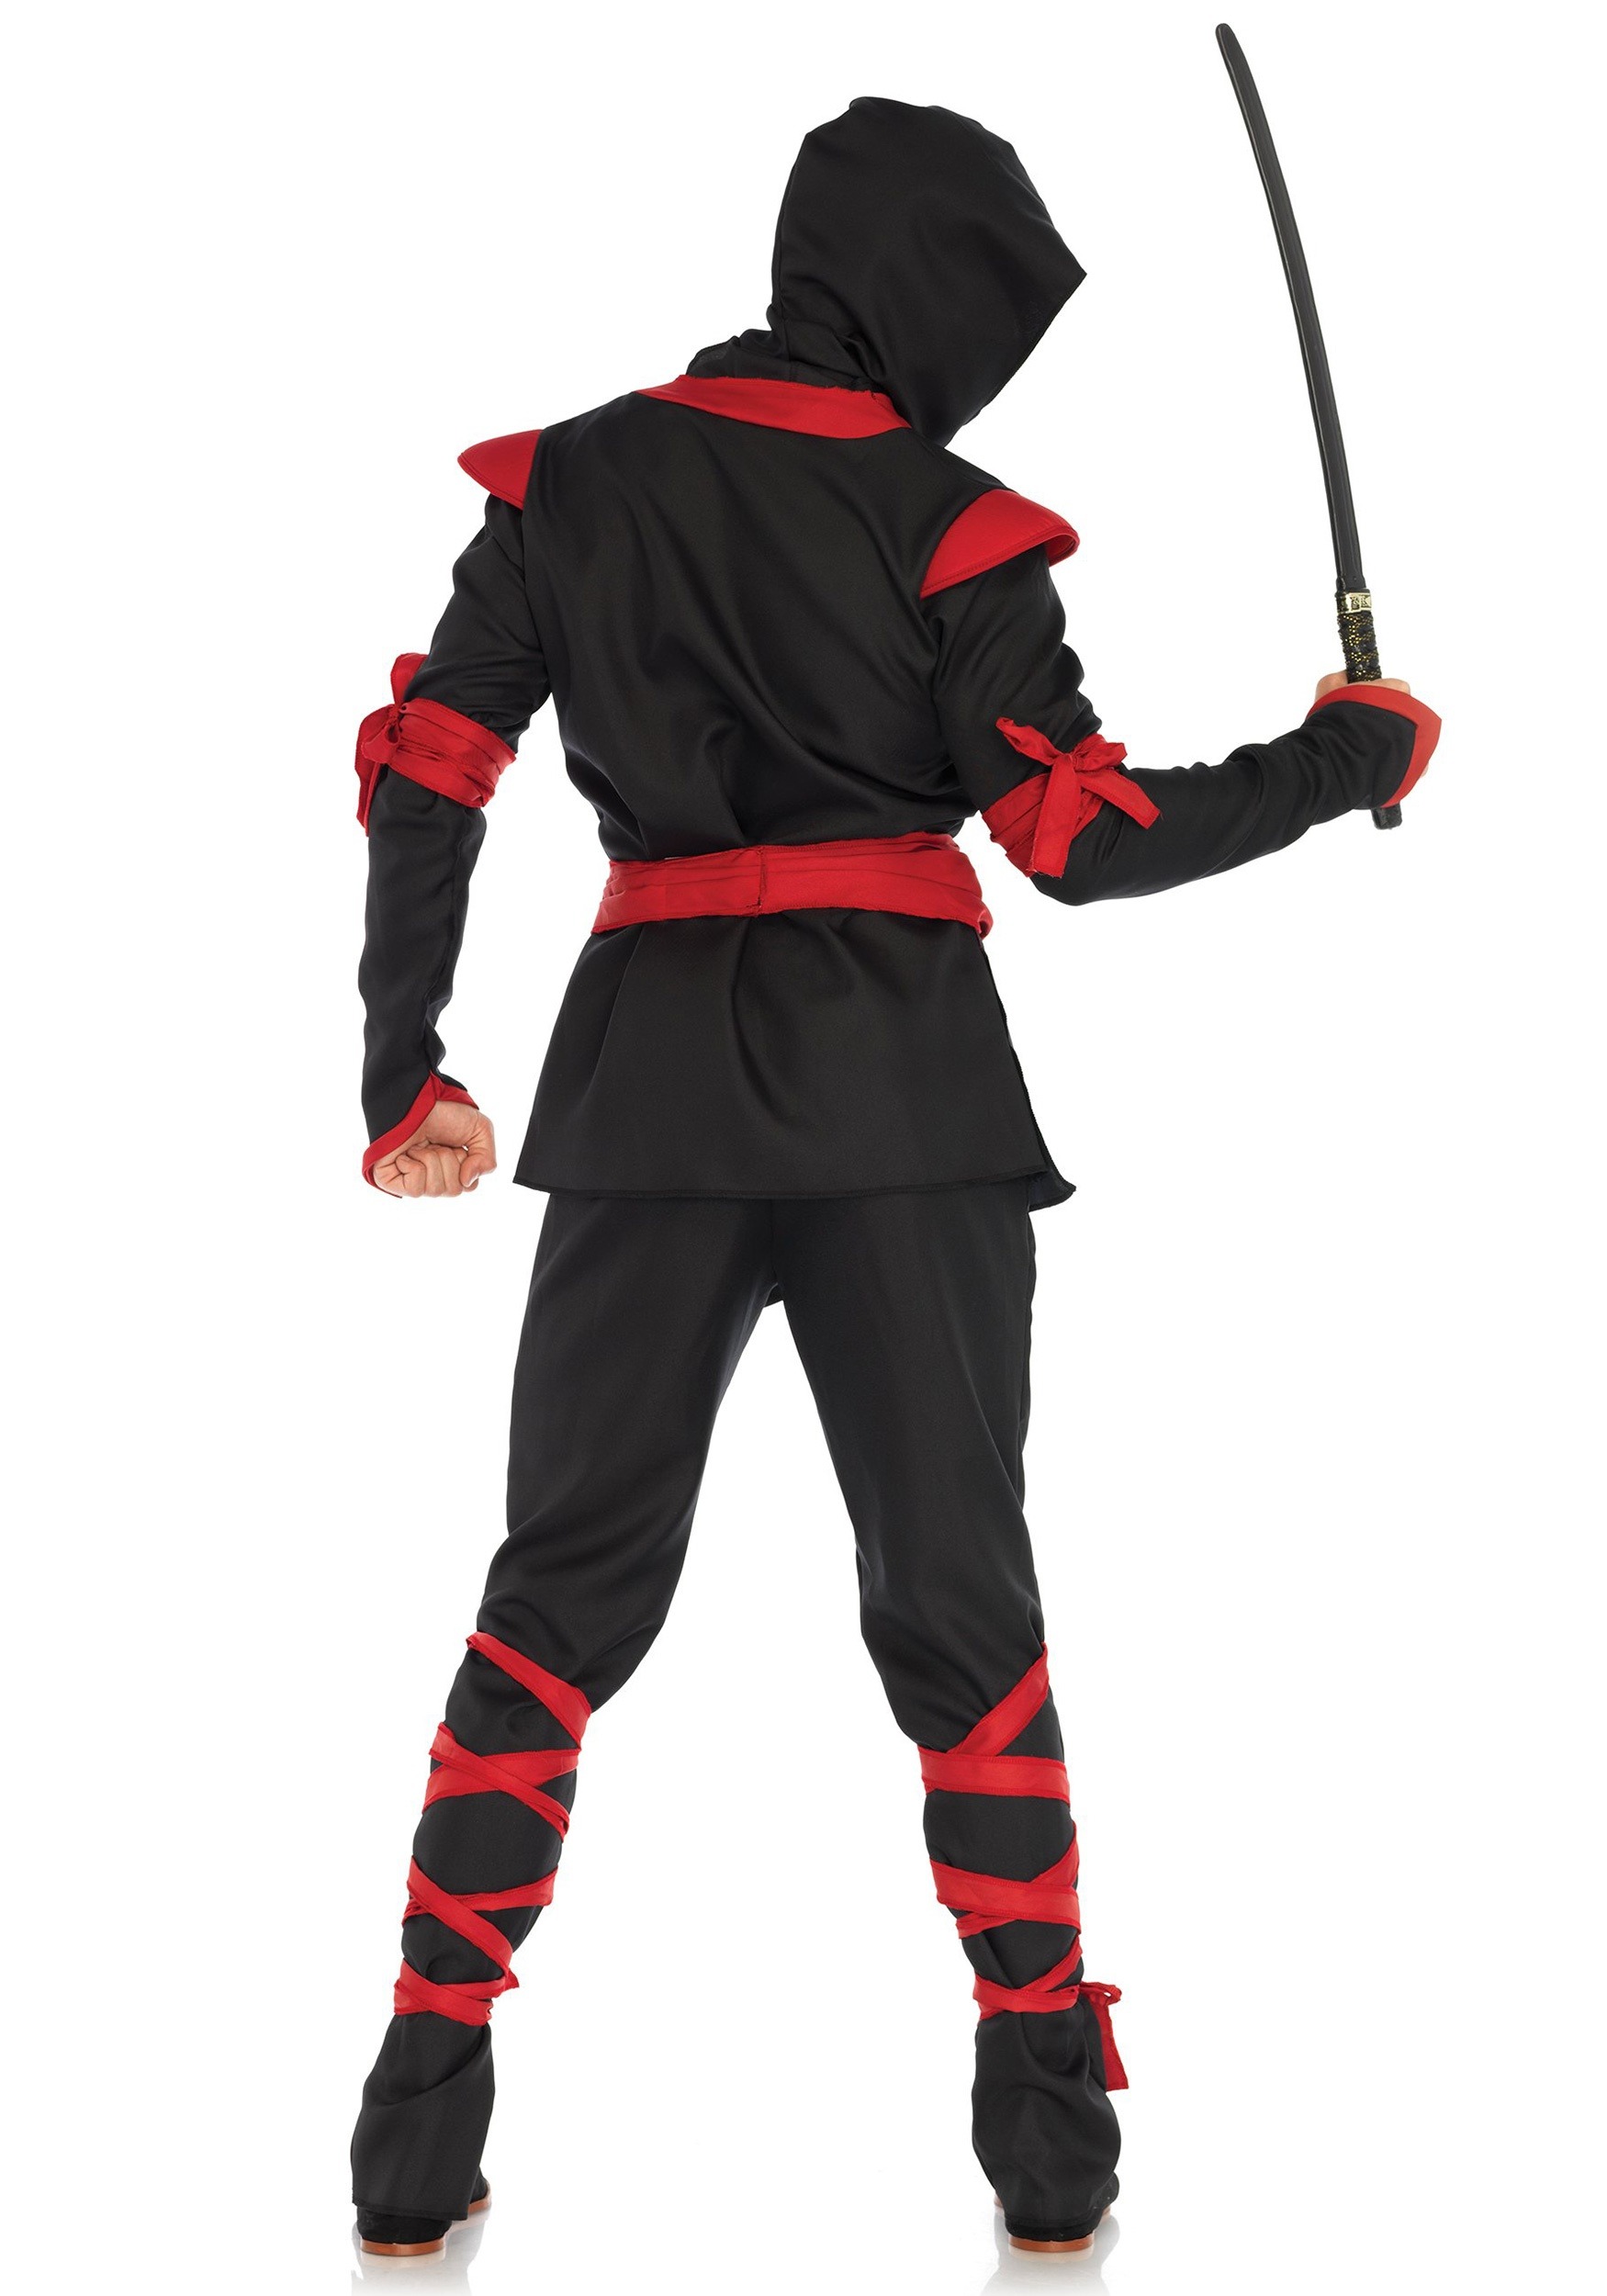 Men's Ninja Fancy Dress Costume